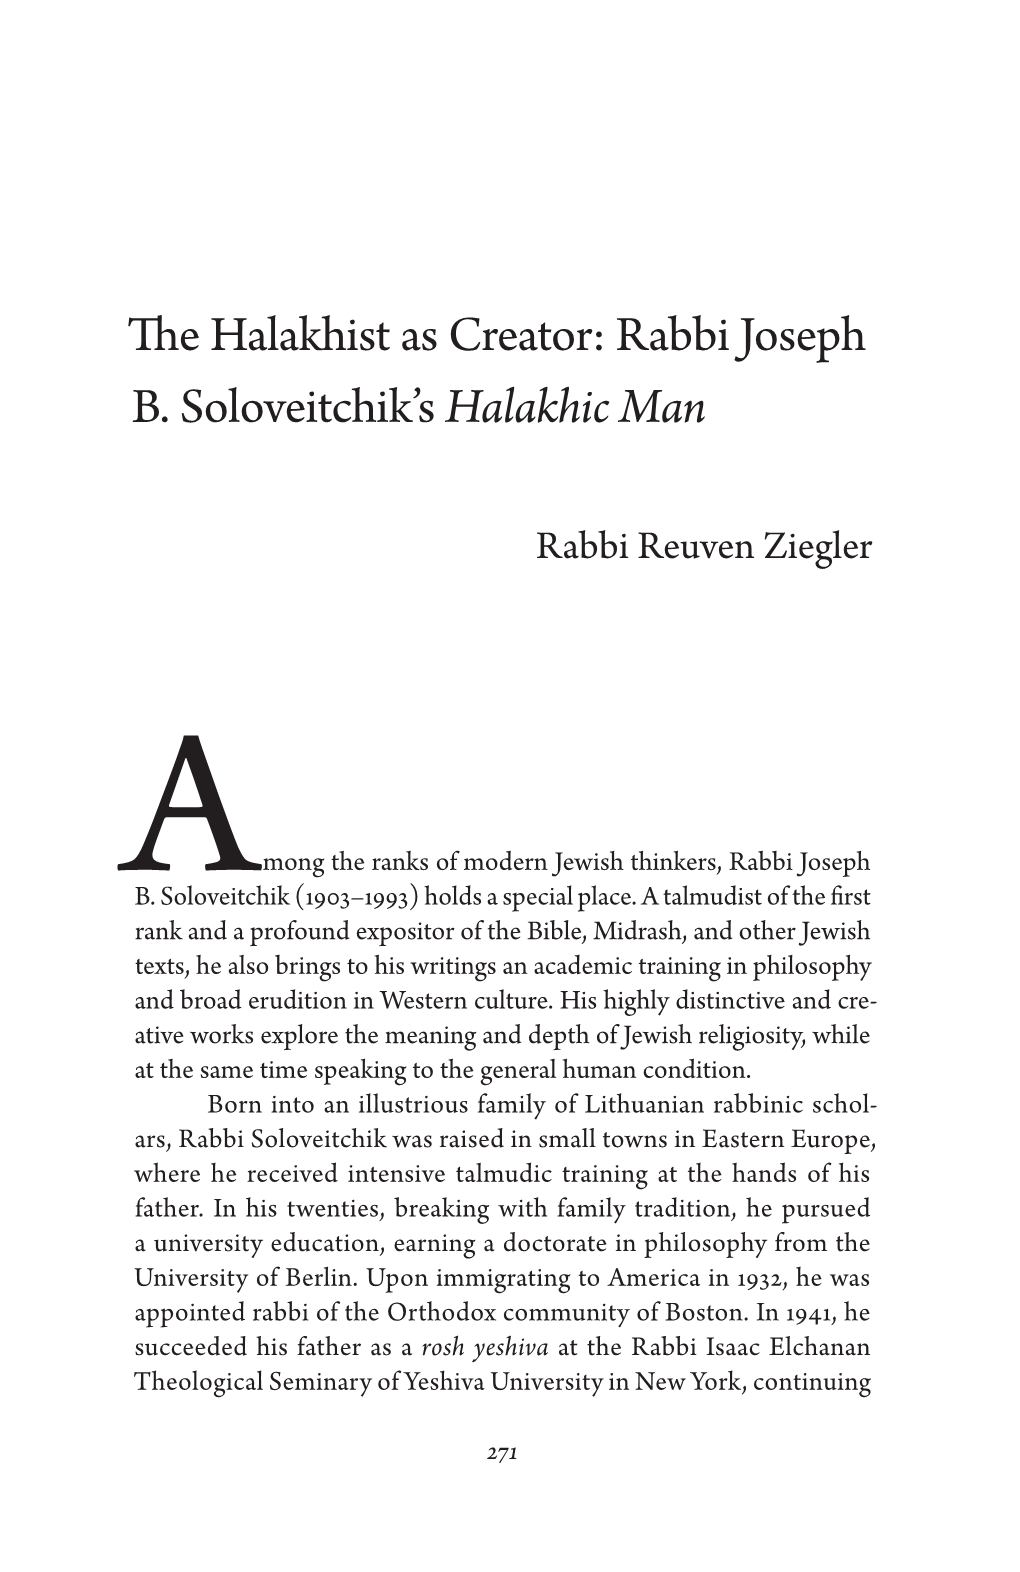 Rabbi Joseph B. Soloveitchik's Halakhic